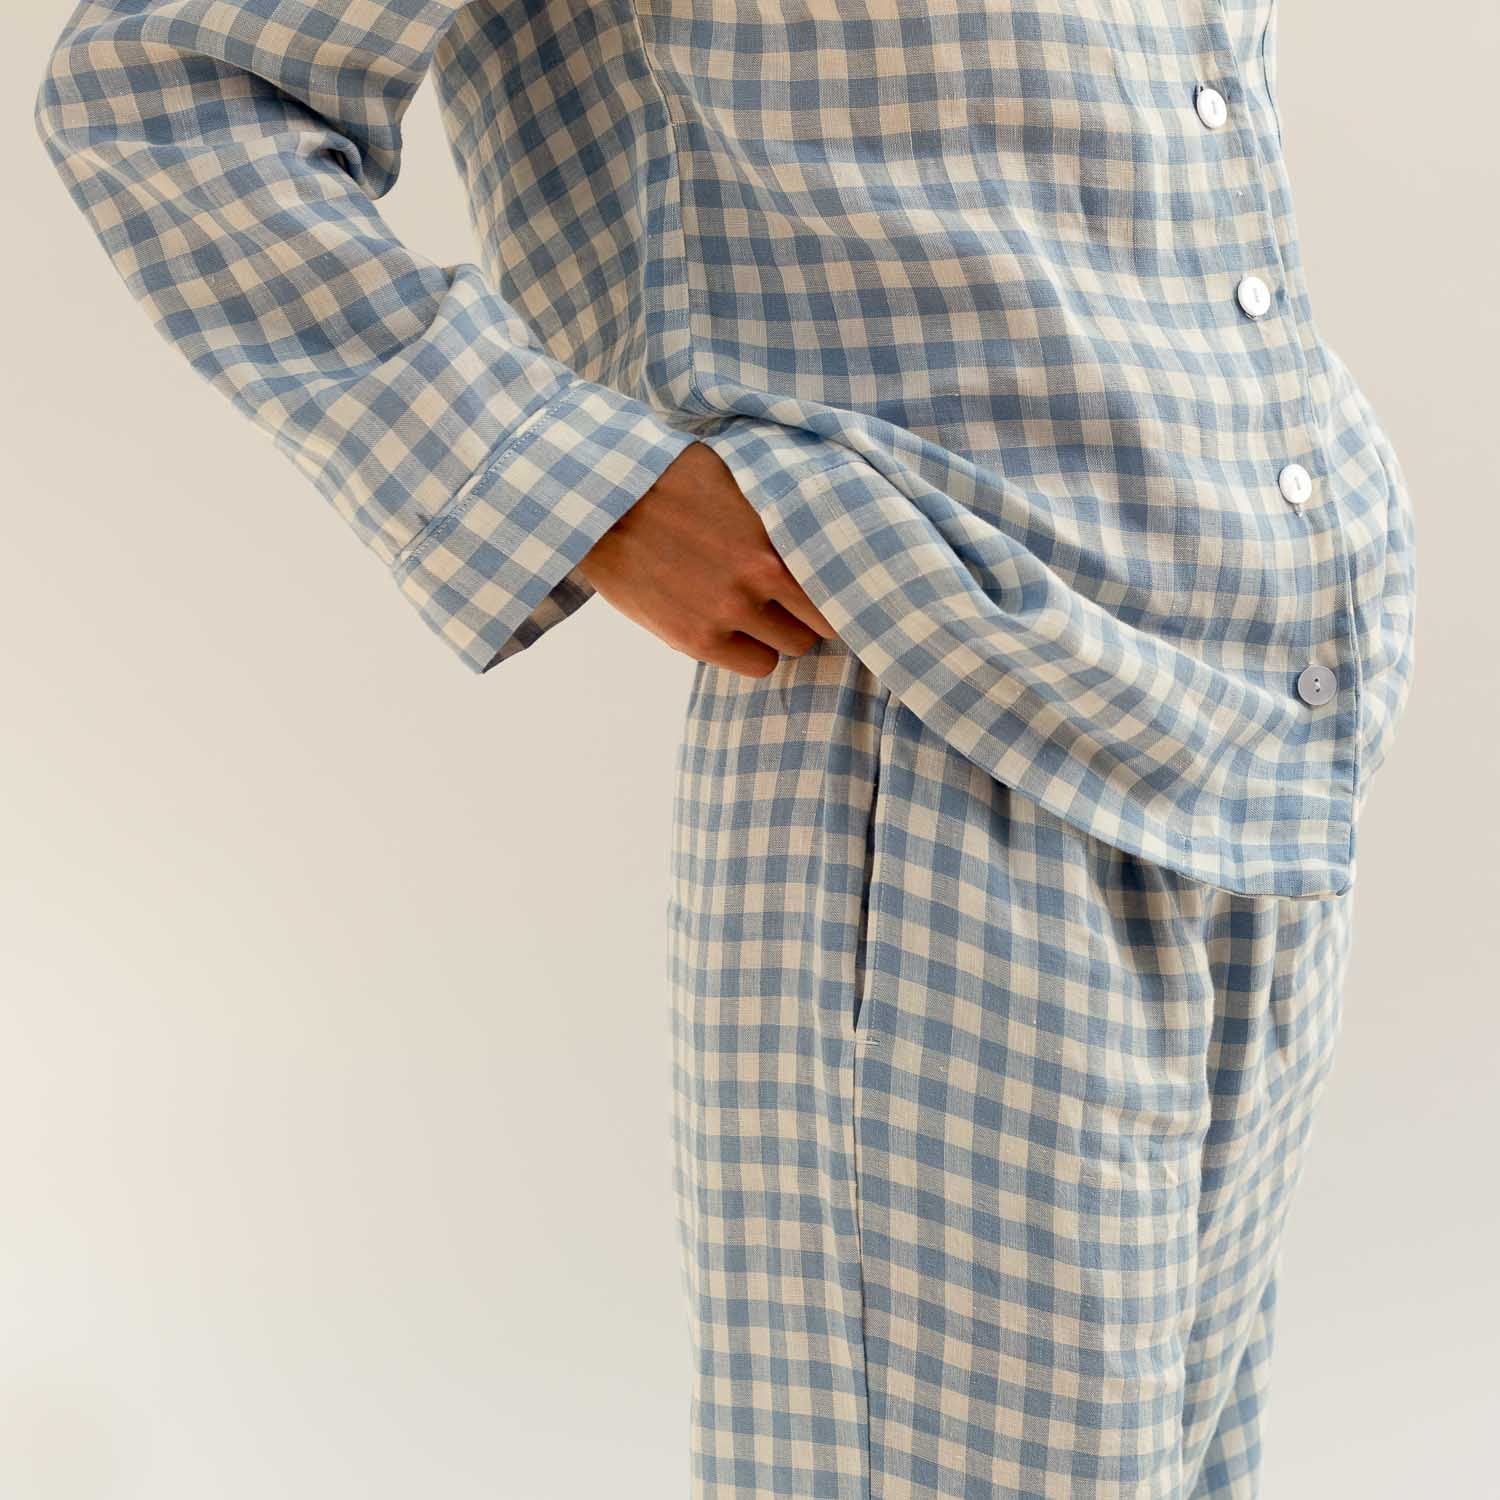 Warm Blue Gingham Linen Pajama Pants